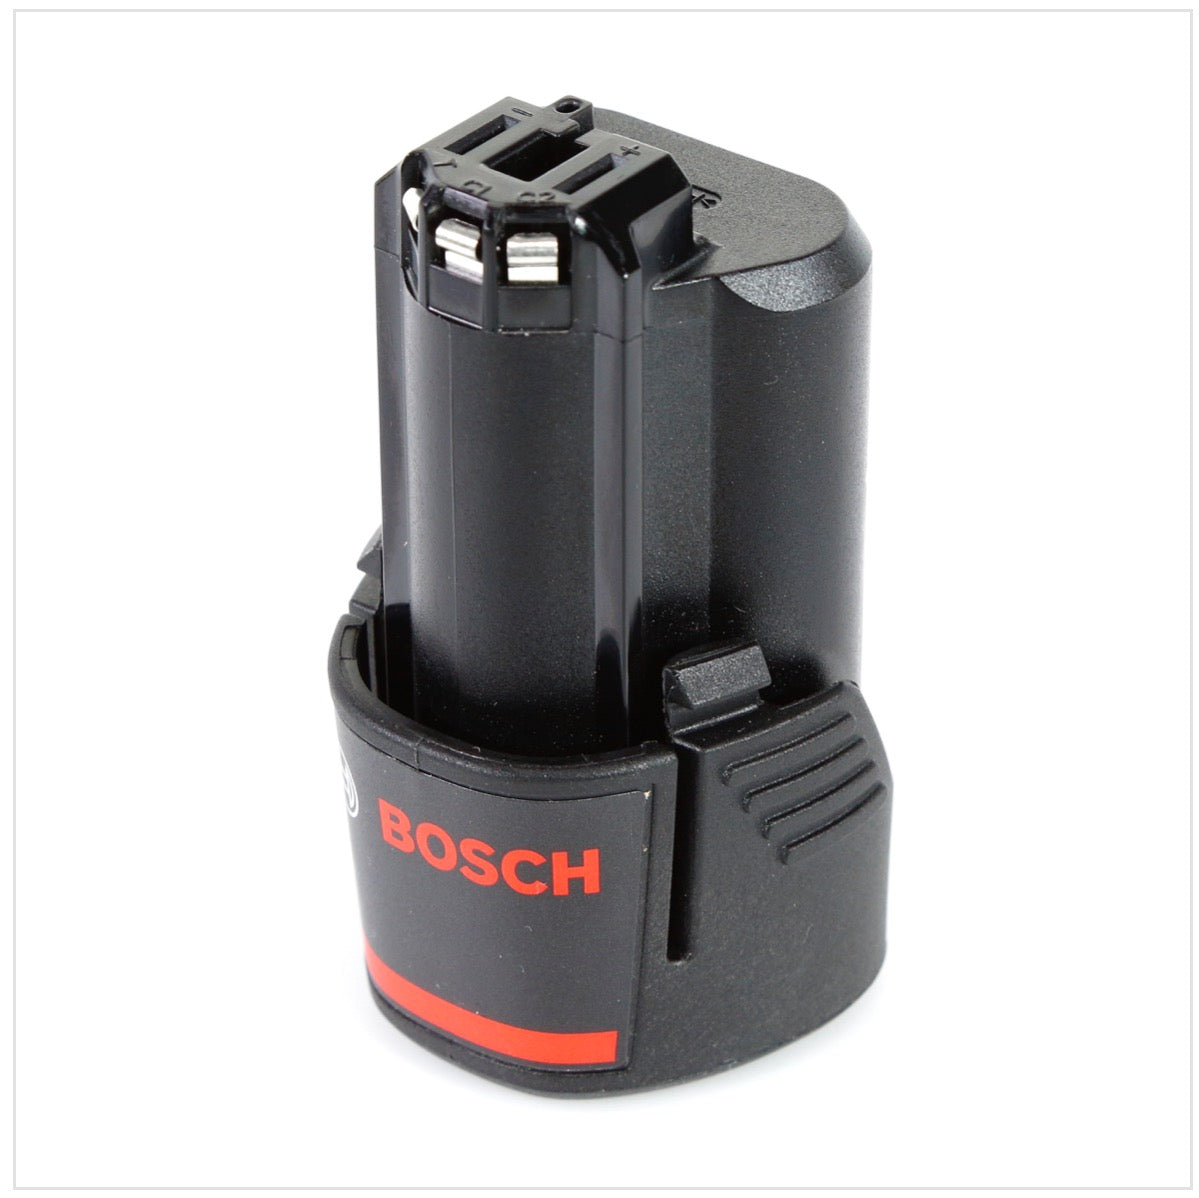 Bosch Starter-Set 12 V mit 1x GBA 12 V 3,0 Ah Akku und GAL 1230 CV Ladegerät - Toolbrothers